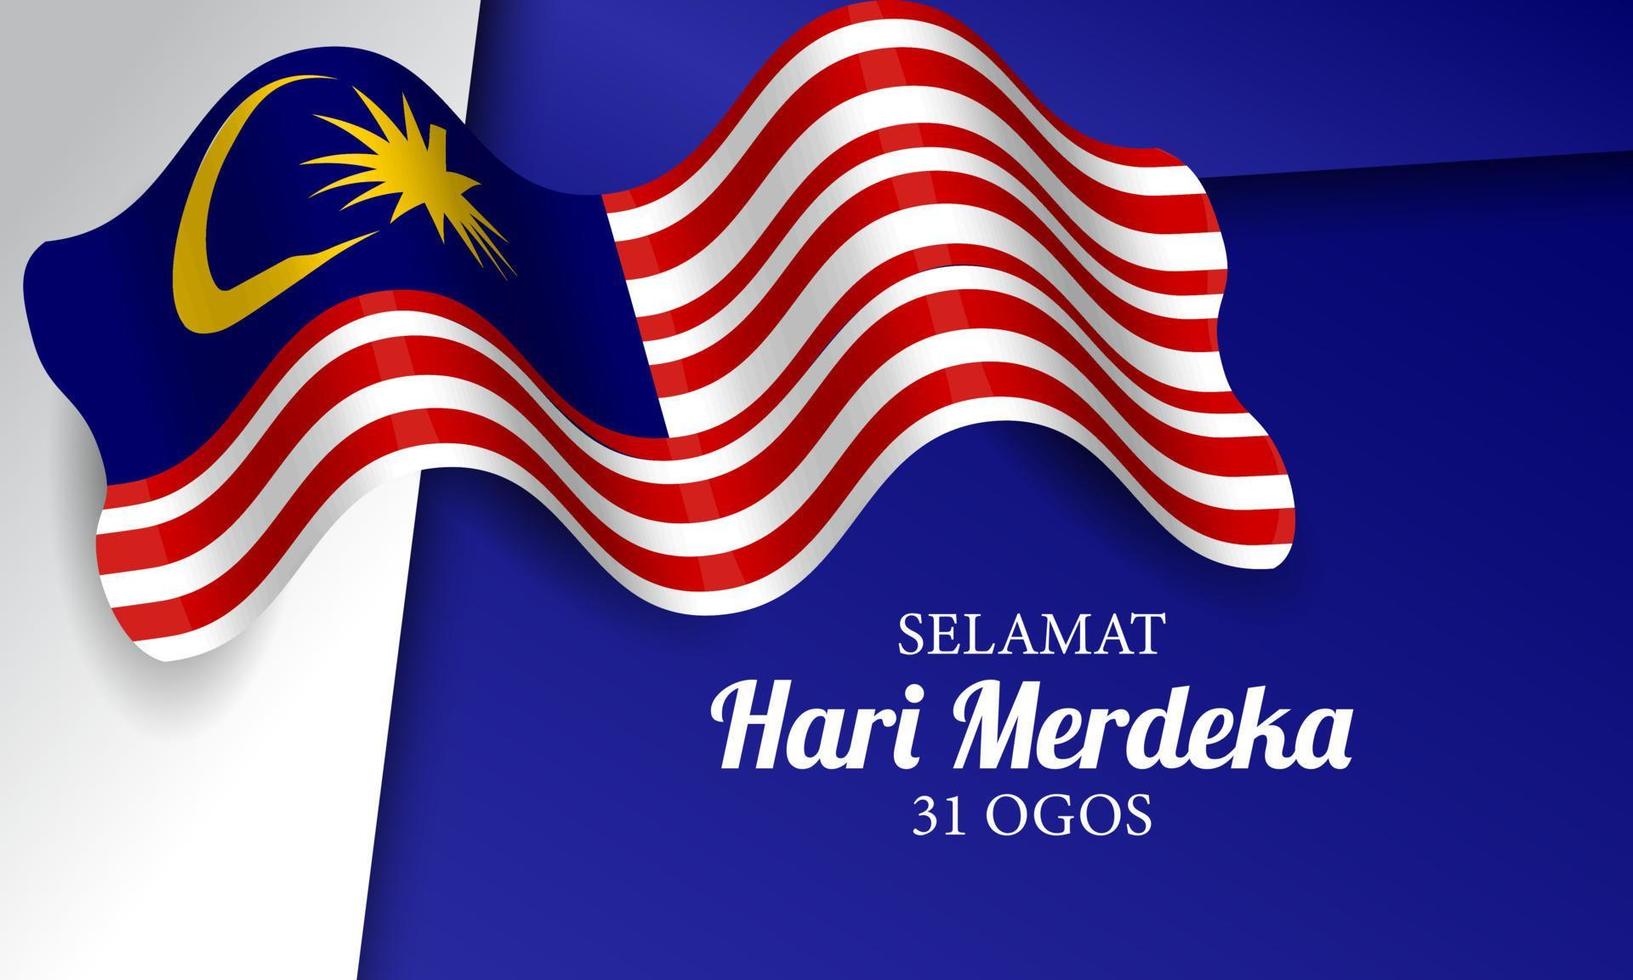 malaysia unabhängigkeitstag hintergrund. vektor